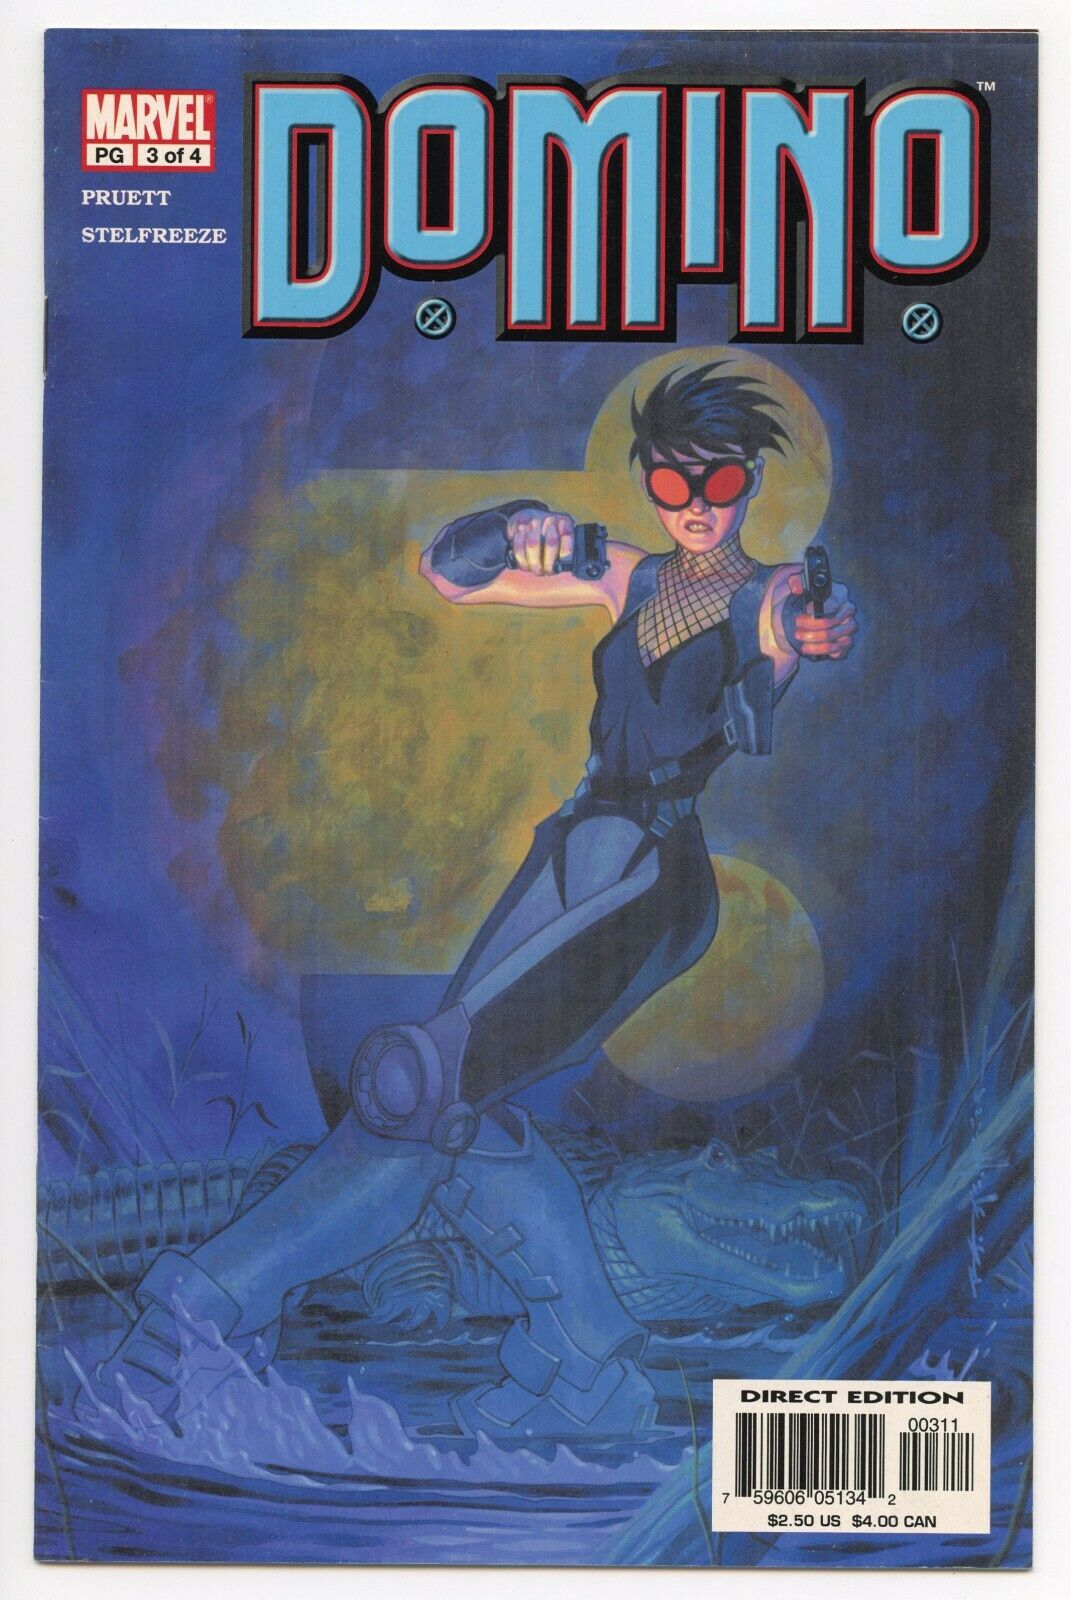 Marvel Comics Domino (2003) #3 Pruett STELFREEZE Cover/Art NM 9.4